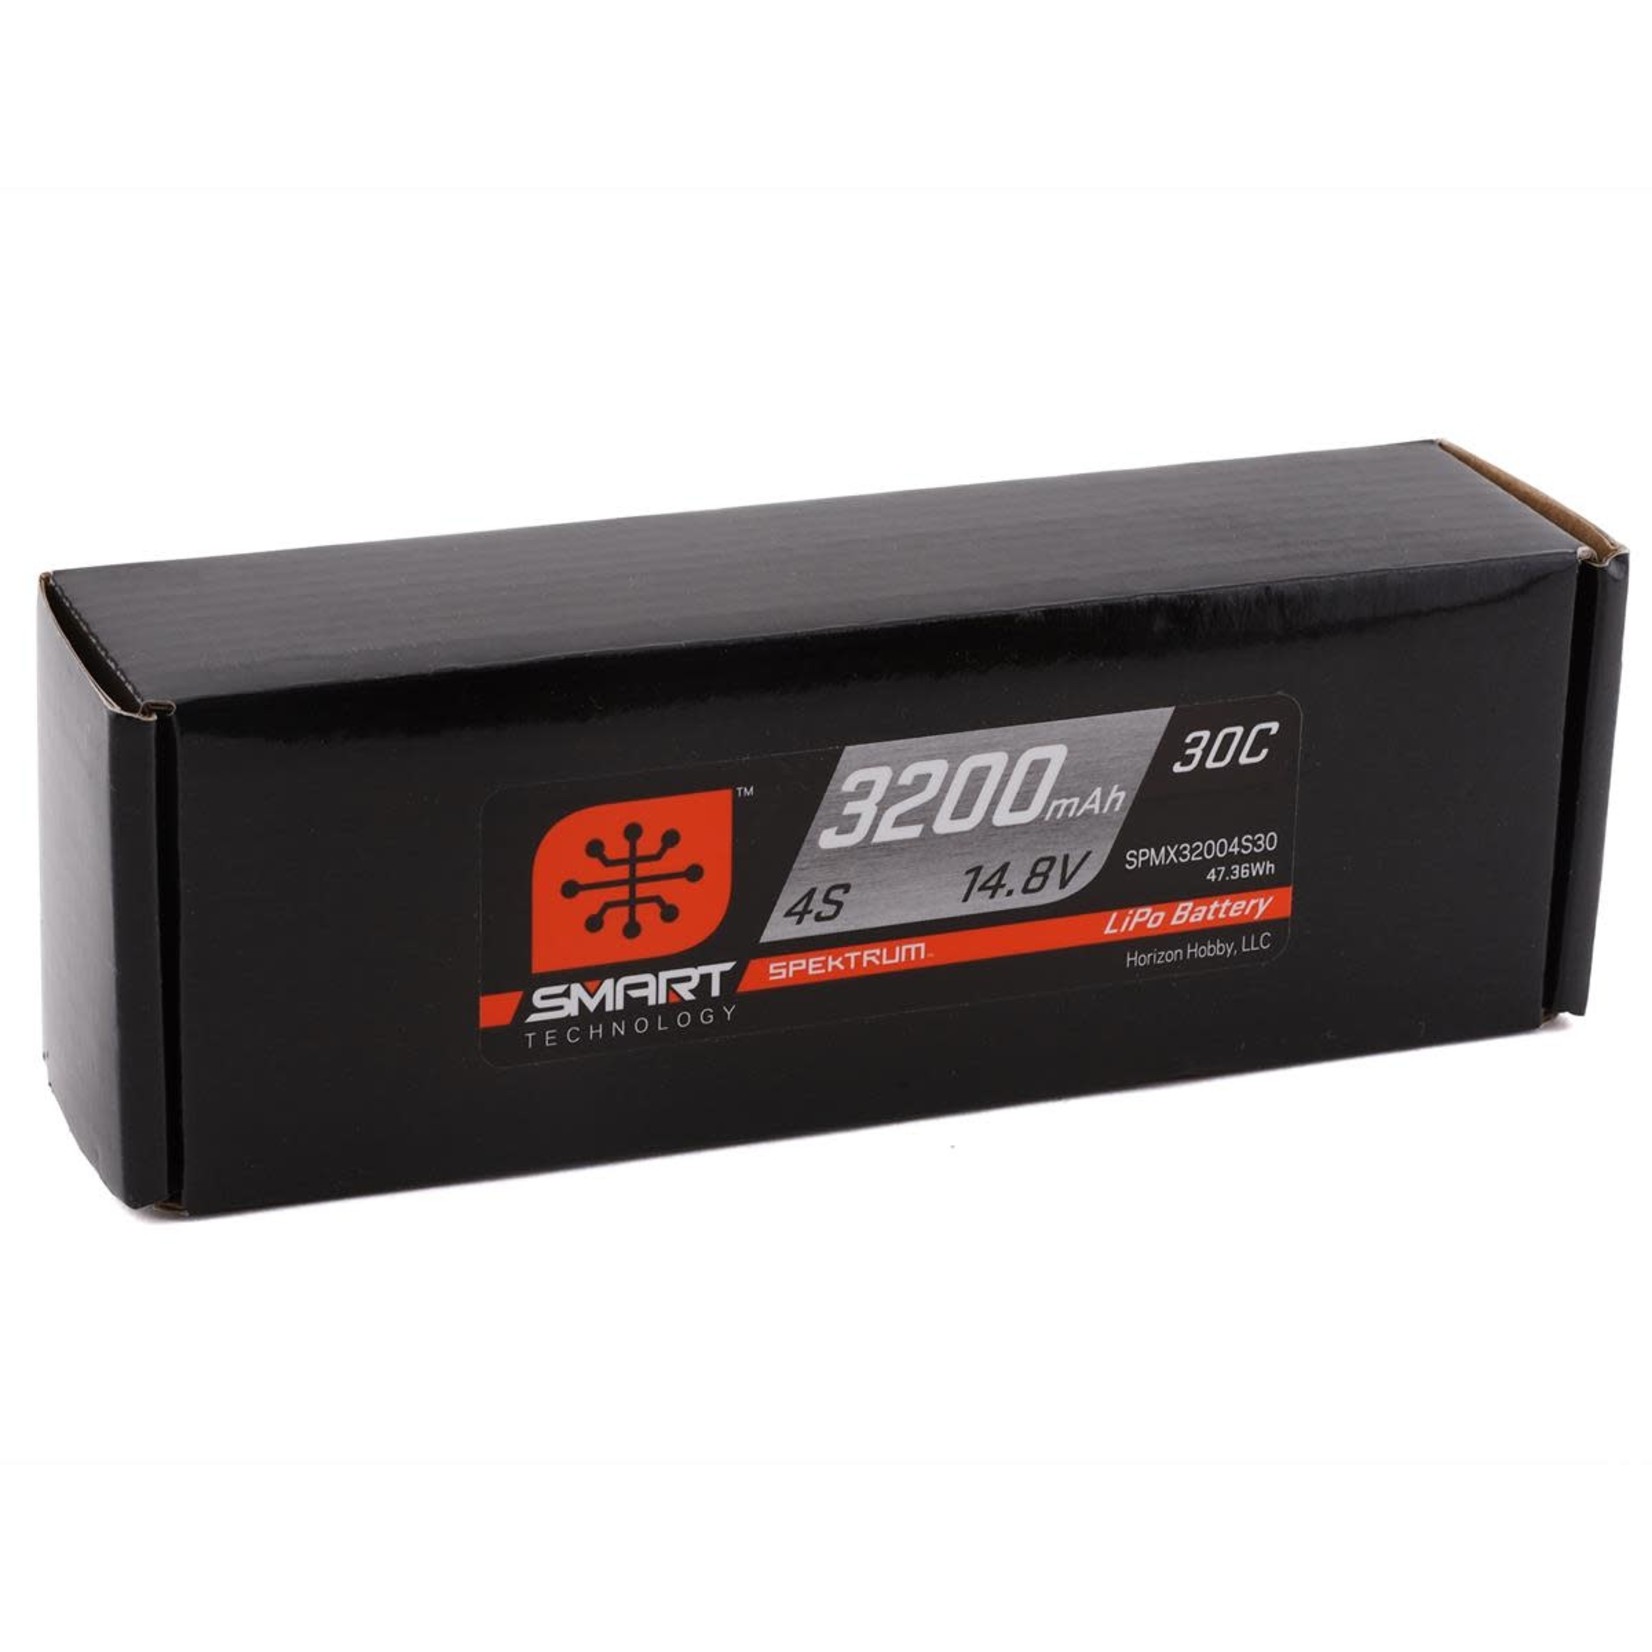 Spektrum Spektrum RC 4S Smart 30C LiPo Battery Pack w/IC3 Connector (14.8V/3200mAh) #SPMX32004S30